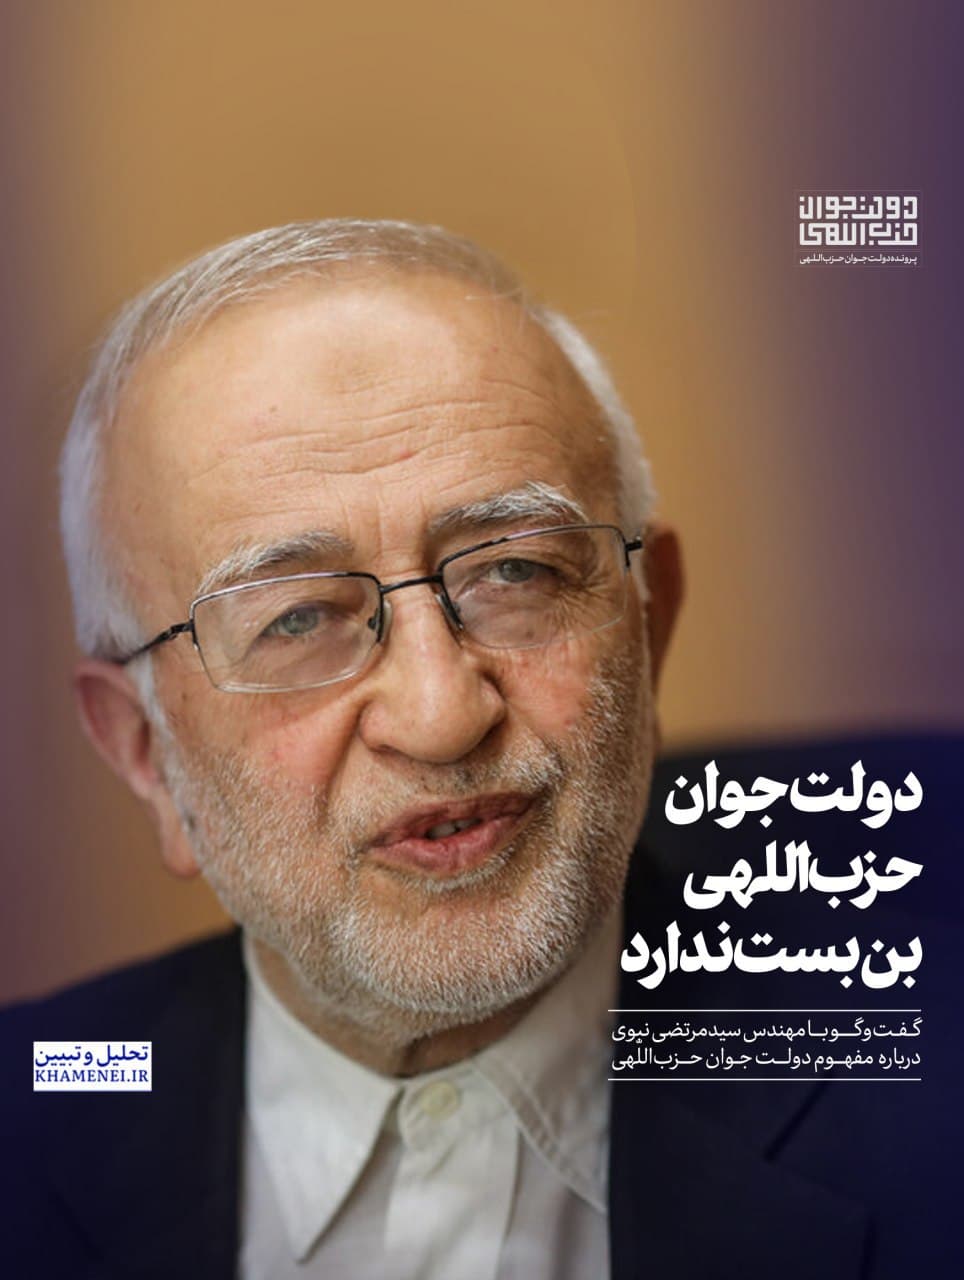 https://idc0-cdn0.khamenei.ir/ndata/news/46311/photo_2020-09-03_20-15-01.jpg